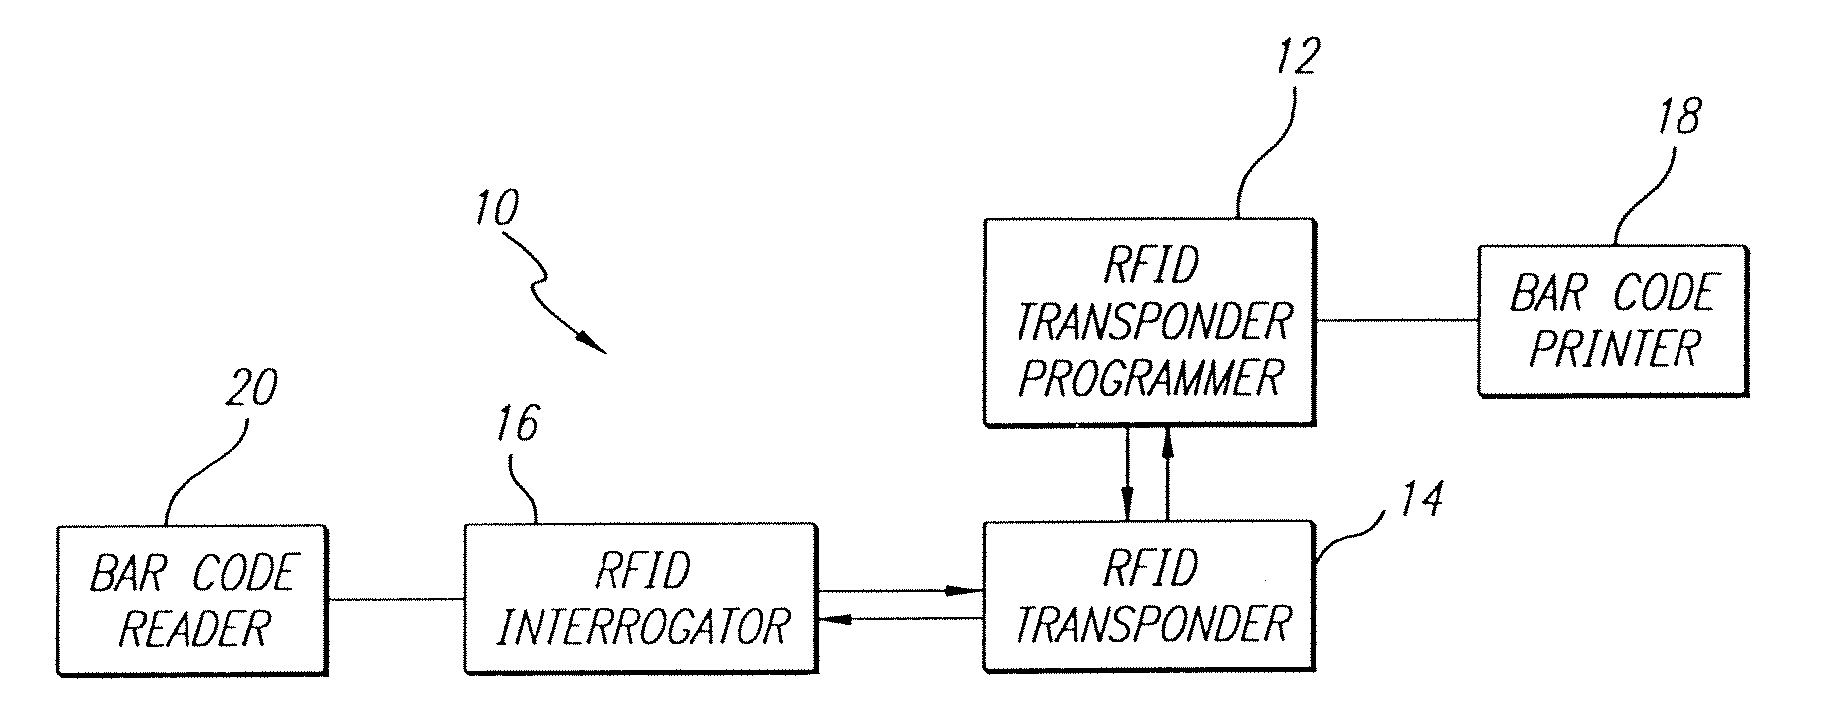 Data encoding in radio frequency identification transponders